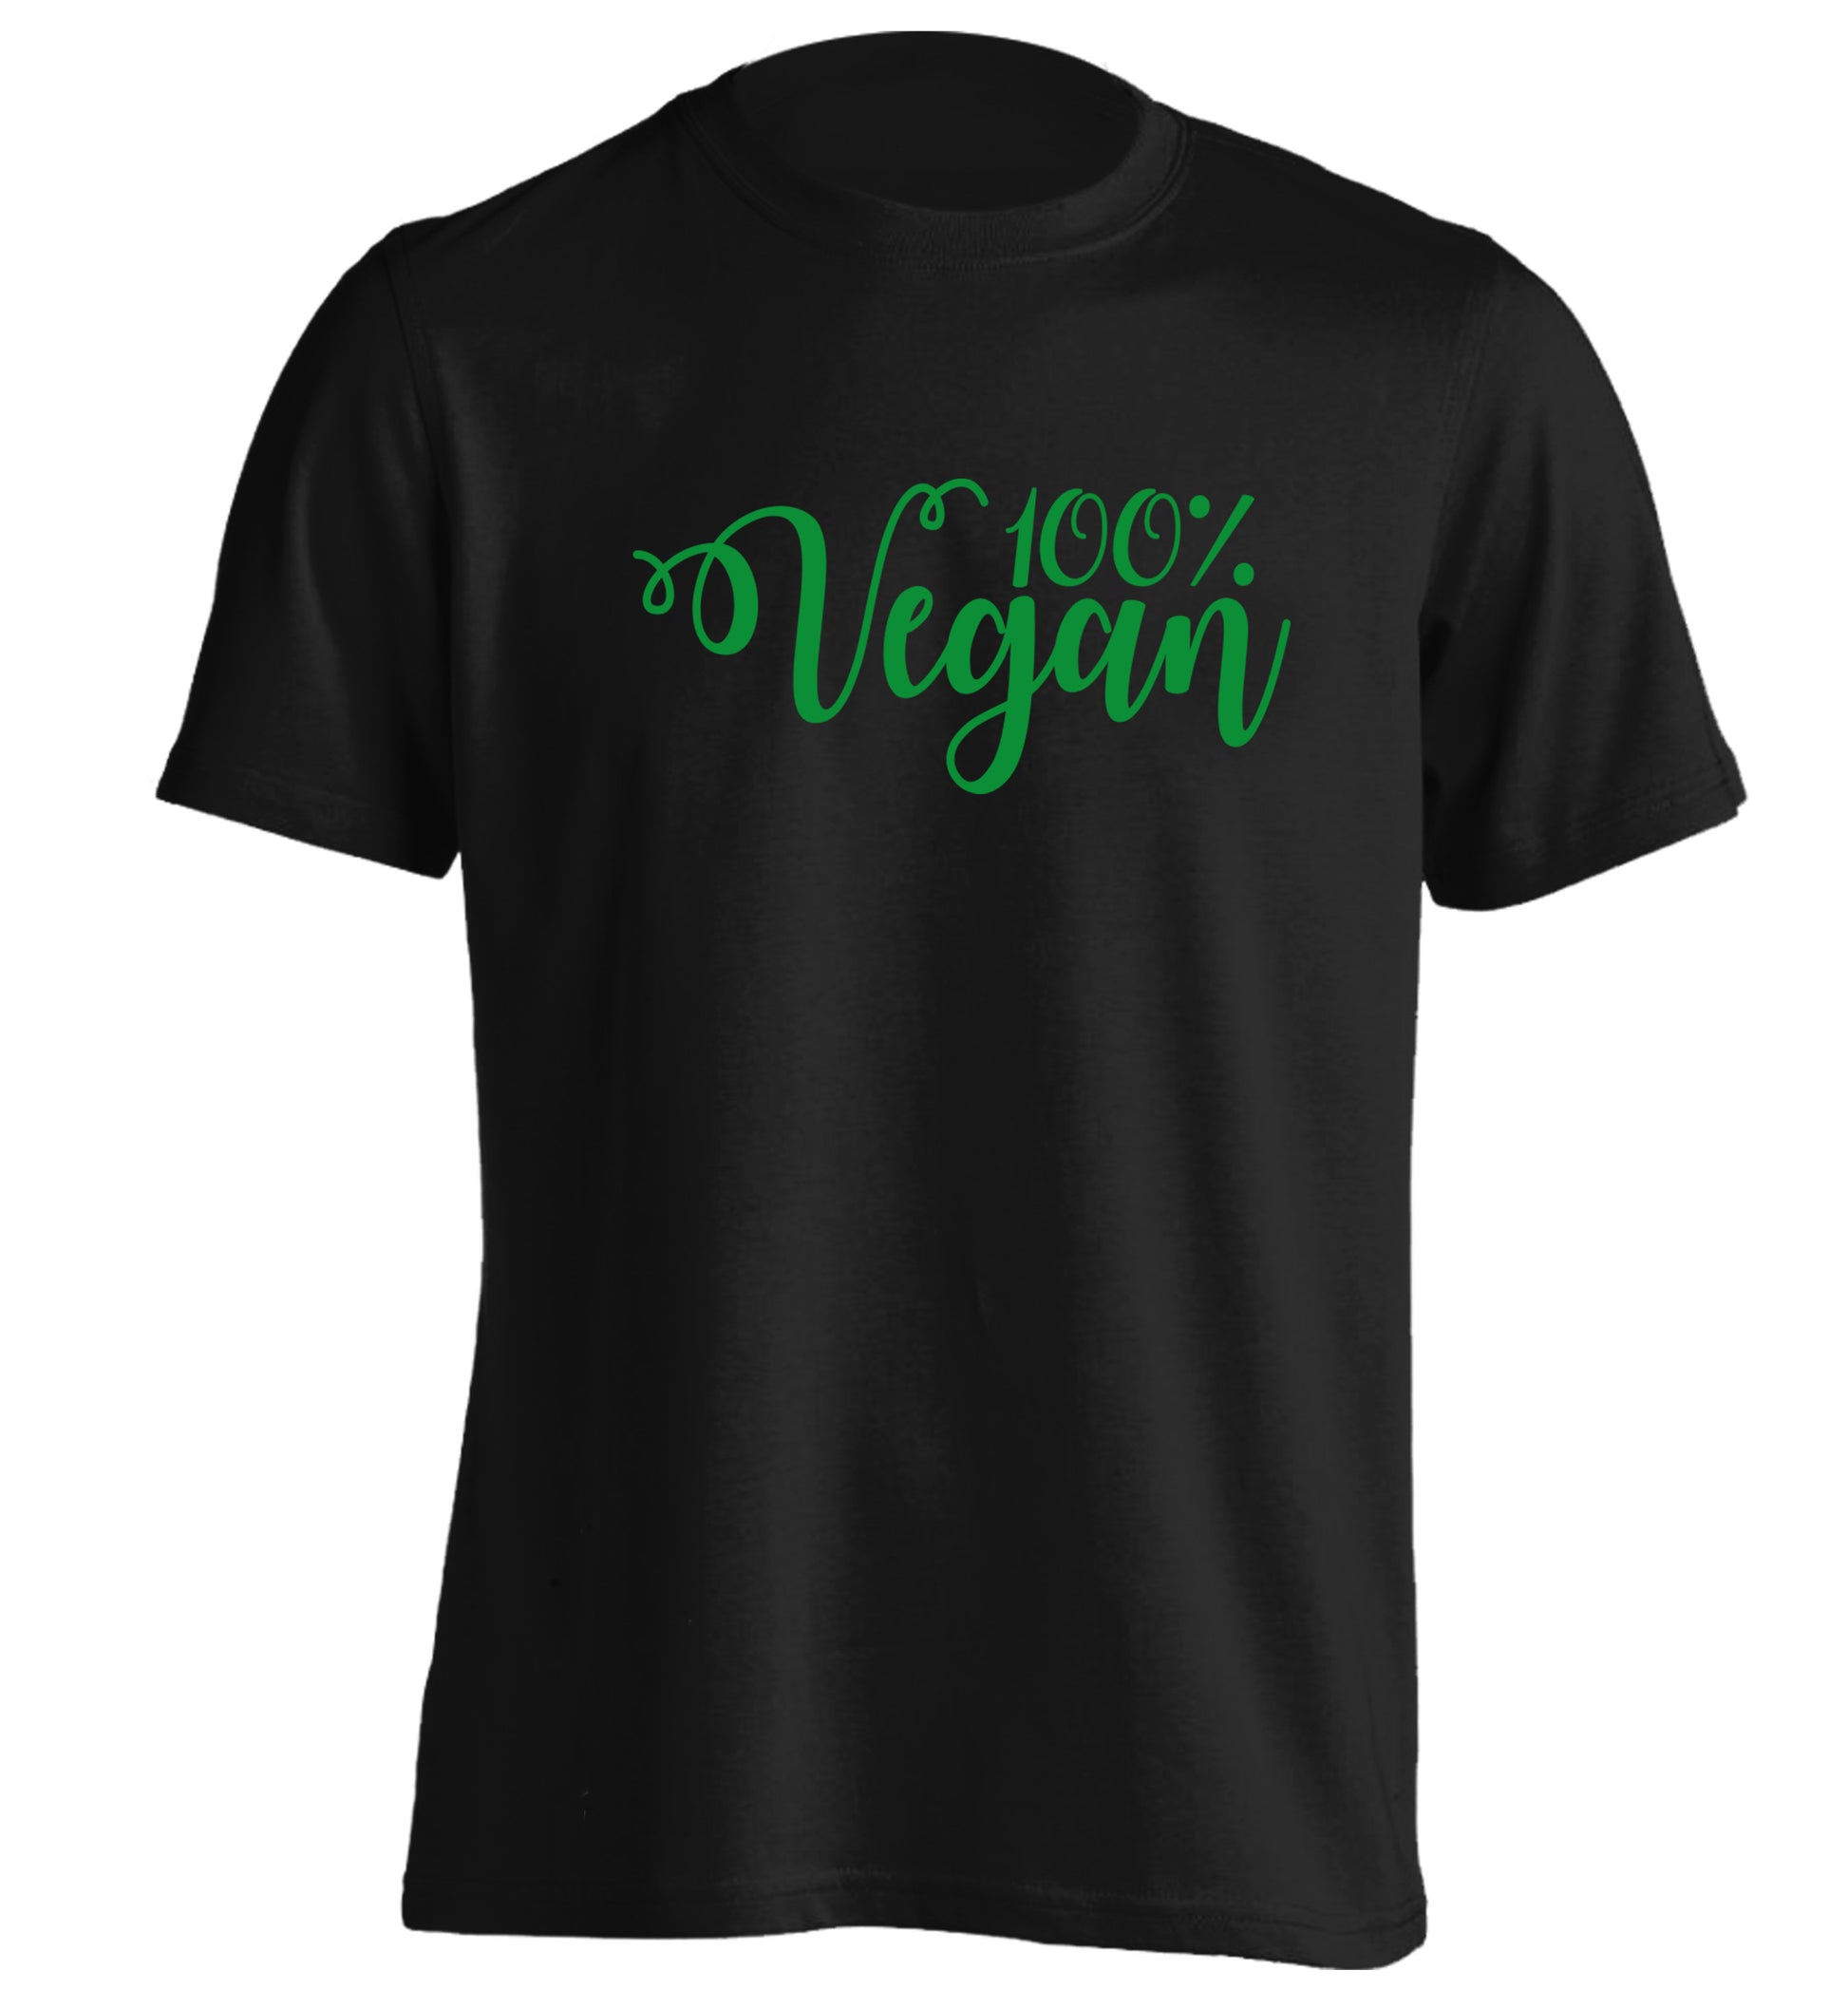 100% Vegan adults unisex black Tshirt 2XL